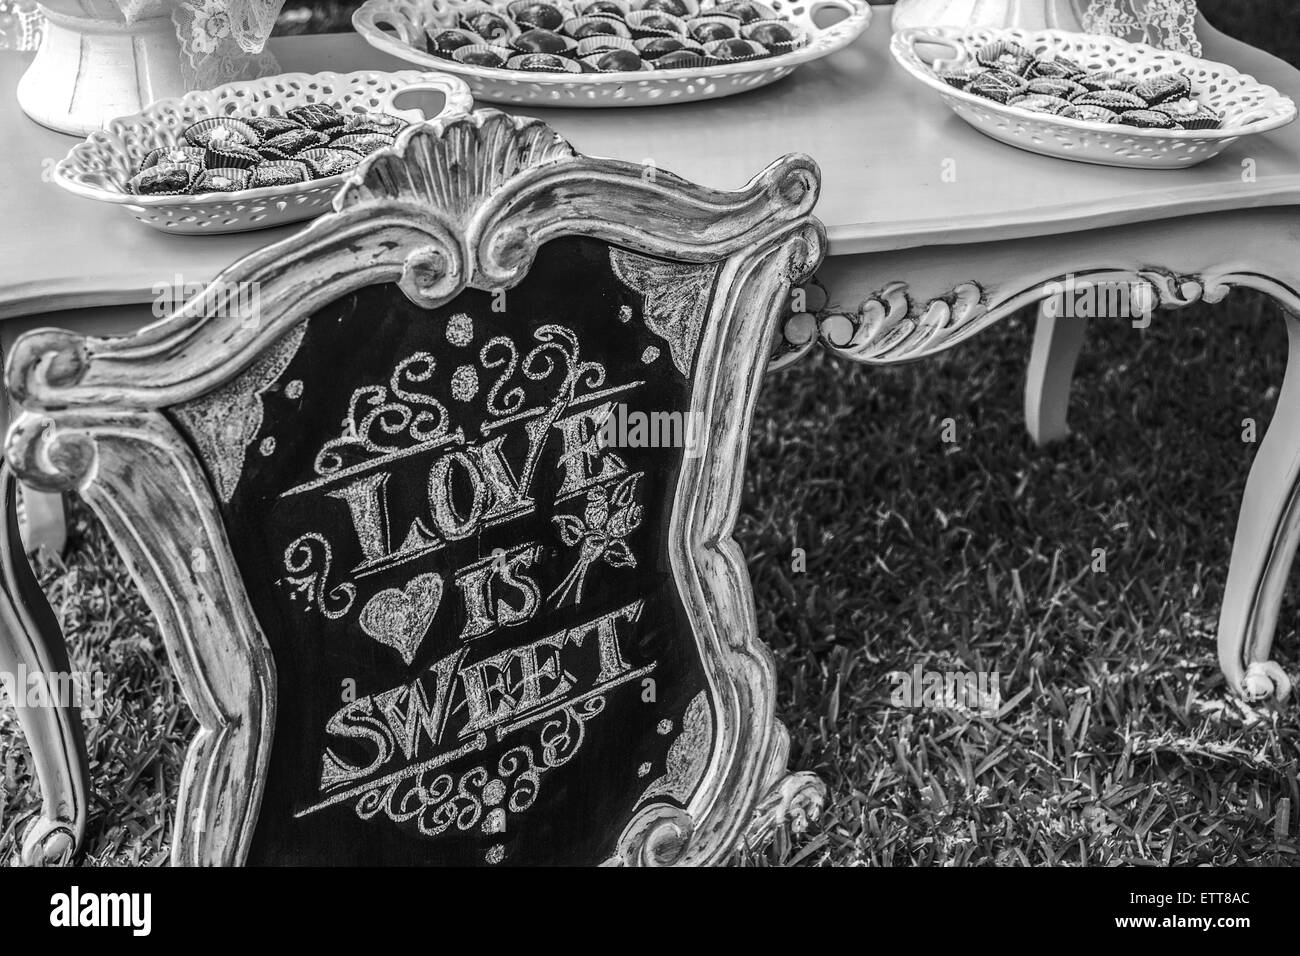 DIY wedding Love is sweet hand written sign Stock Photo